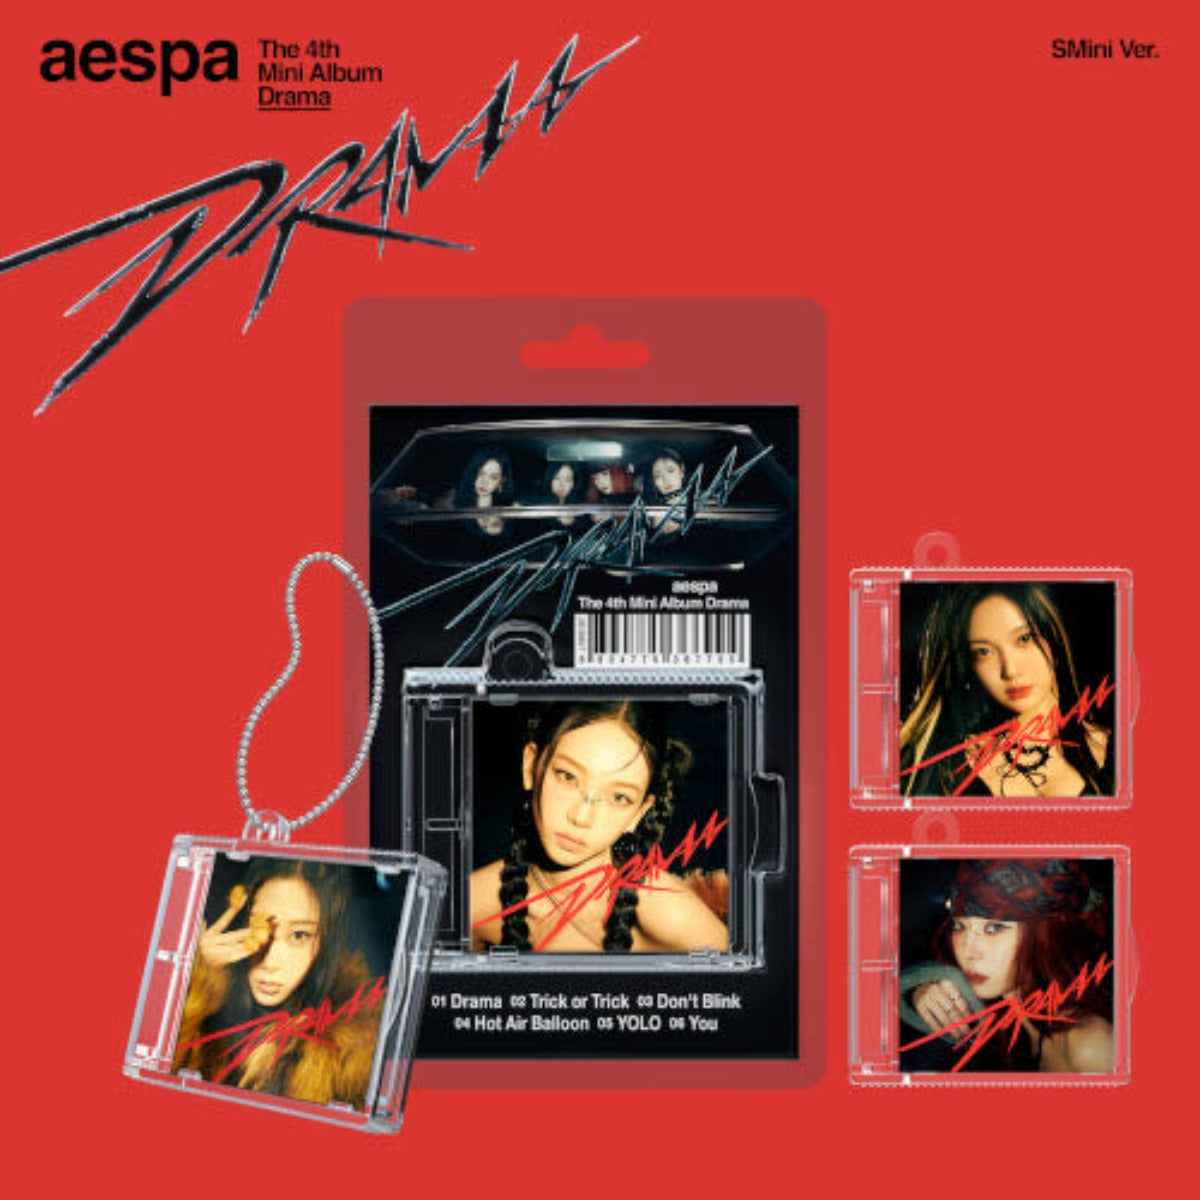 aespa Mini Album Vol. 4 - Drama (SMini Version)